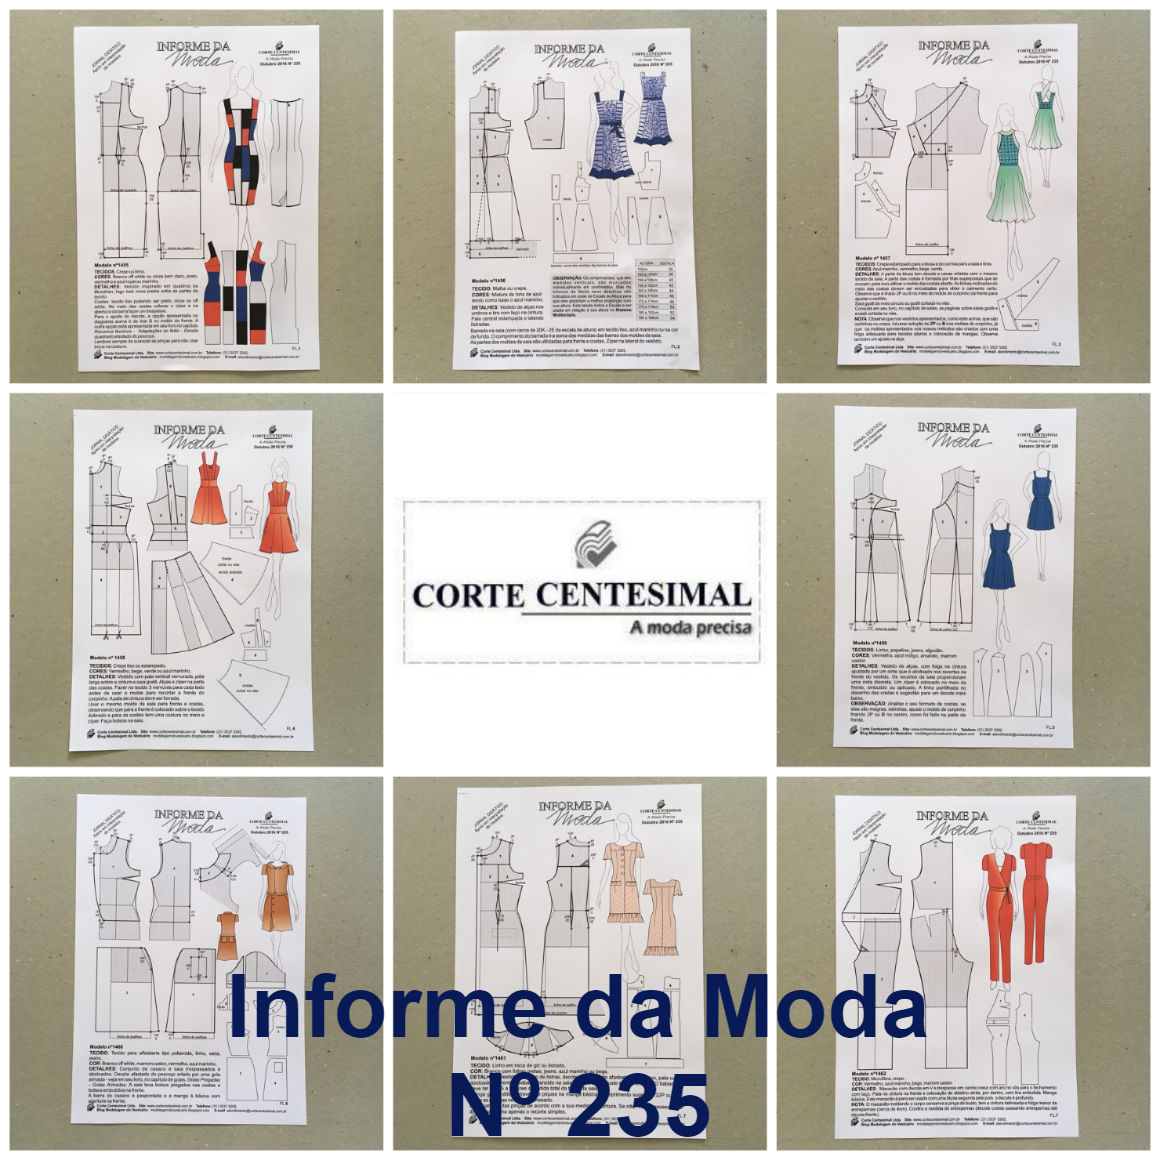 INFORME DA MODA 2016 (234 e 235)  - Corte Centesimal